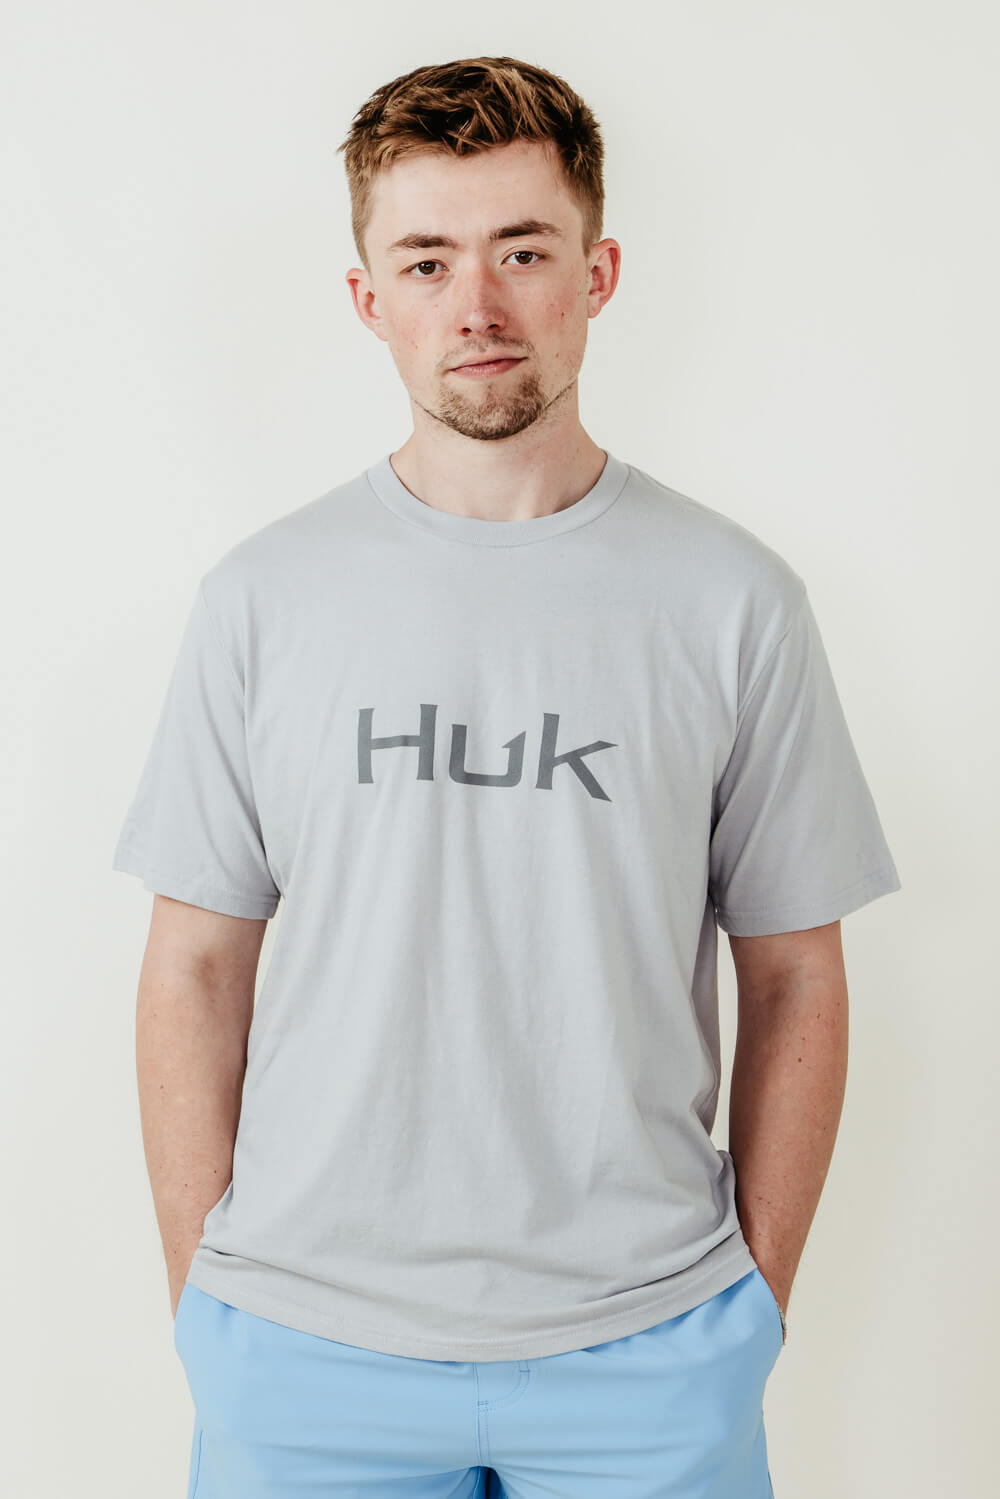 Huk Men's Vented Pursuit Shirt - Long Sleeve - Harbor Mist